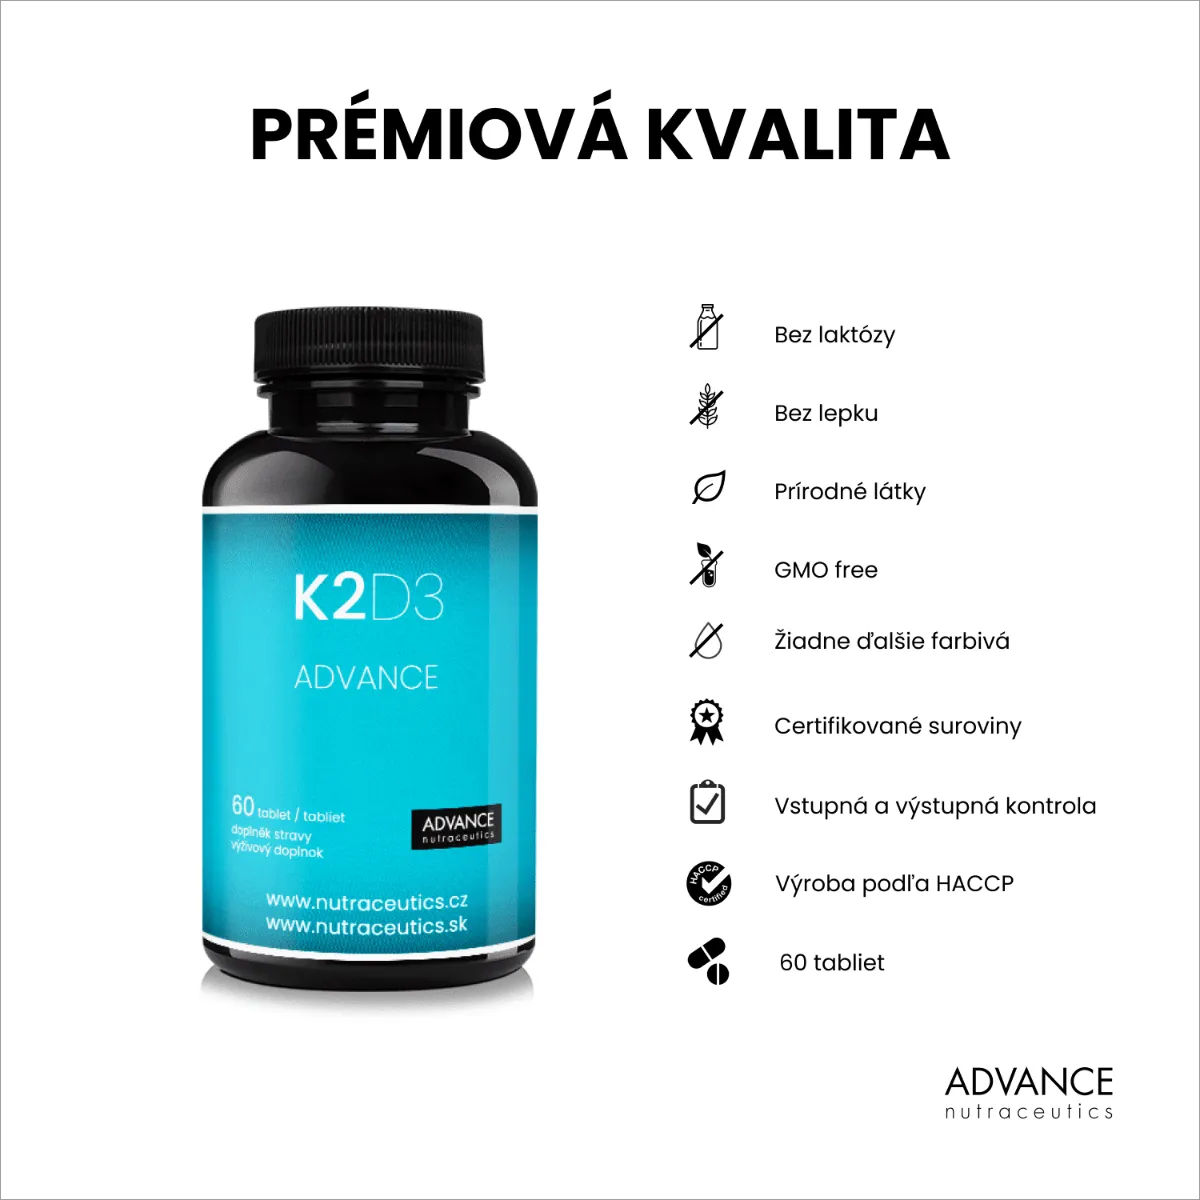 K2D3 ADVANCE 60 cps. – unikátny vitamín 1×60 tbl, výživový doplnok